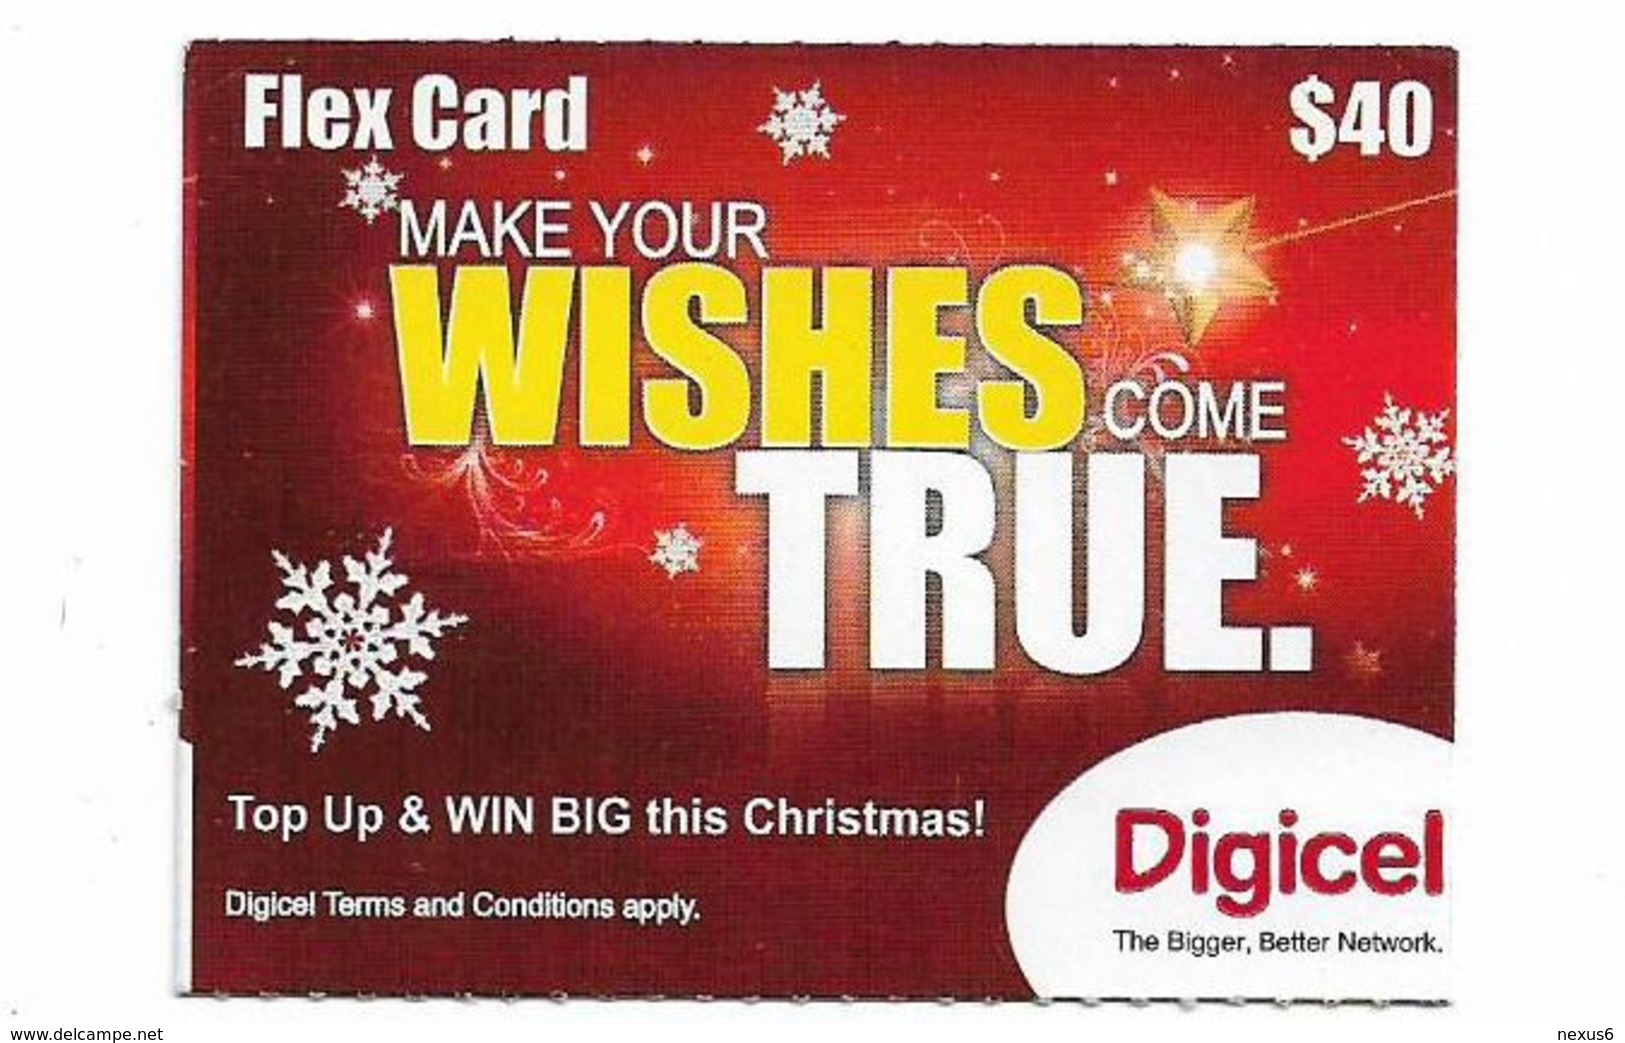 Grenada - Digicel - Flex Card, Make Your Christmas Wishes, Smaller Size GSM Refill 40EC$, Exp. 18.09.2012, Used - Grenada (Granada)